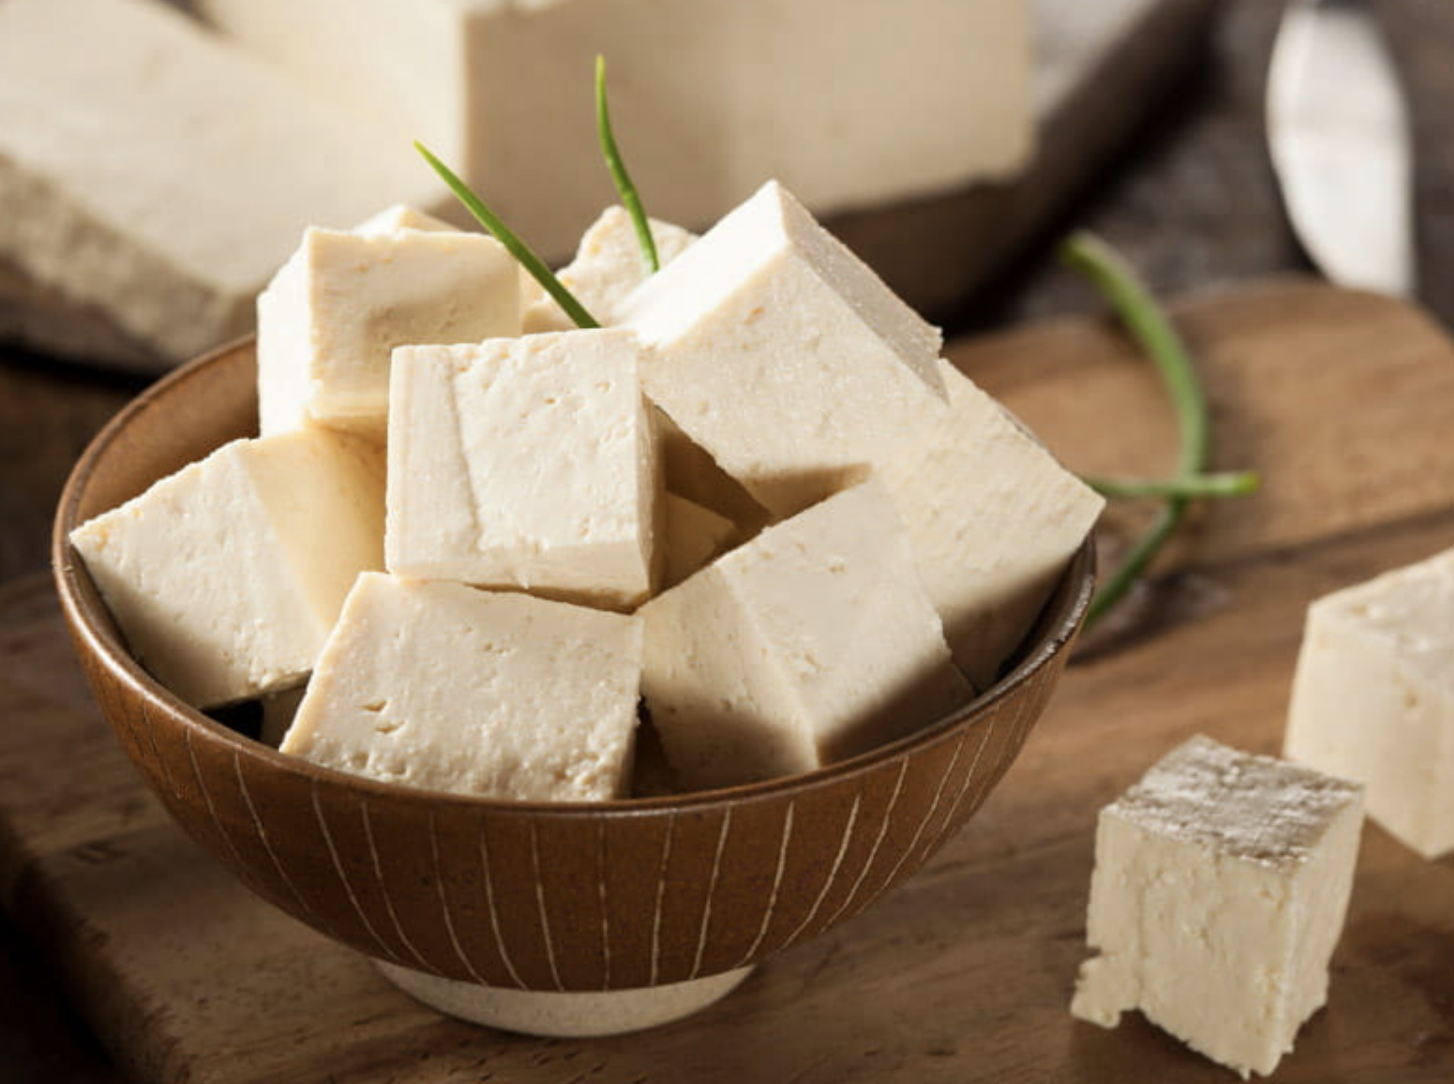 tofu proteiini, aminohapot, soijaisoflavonit